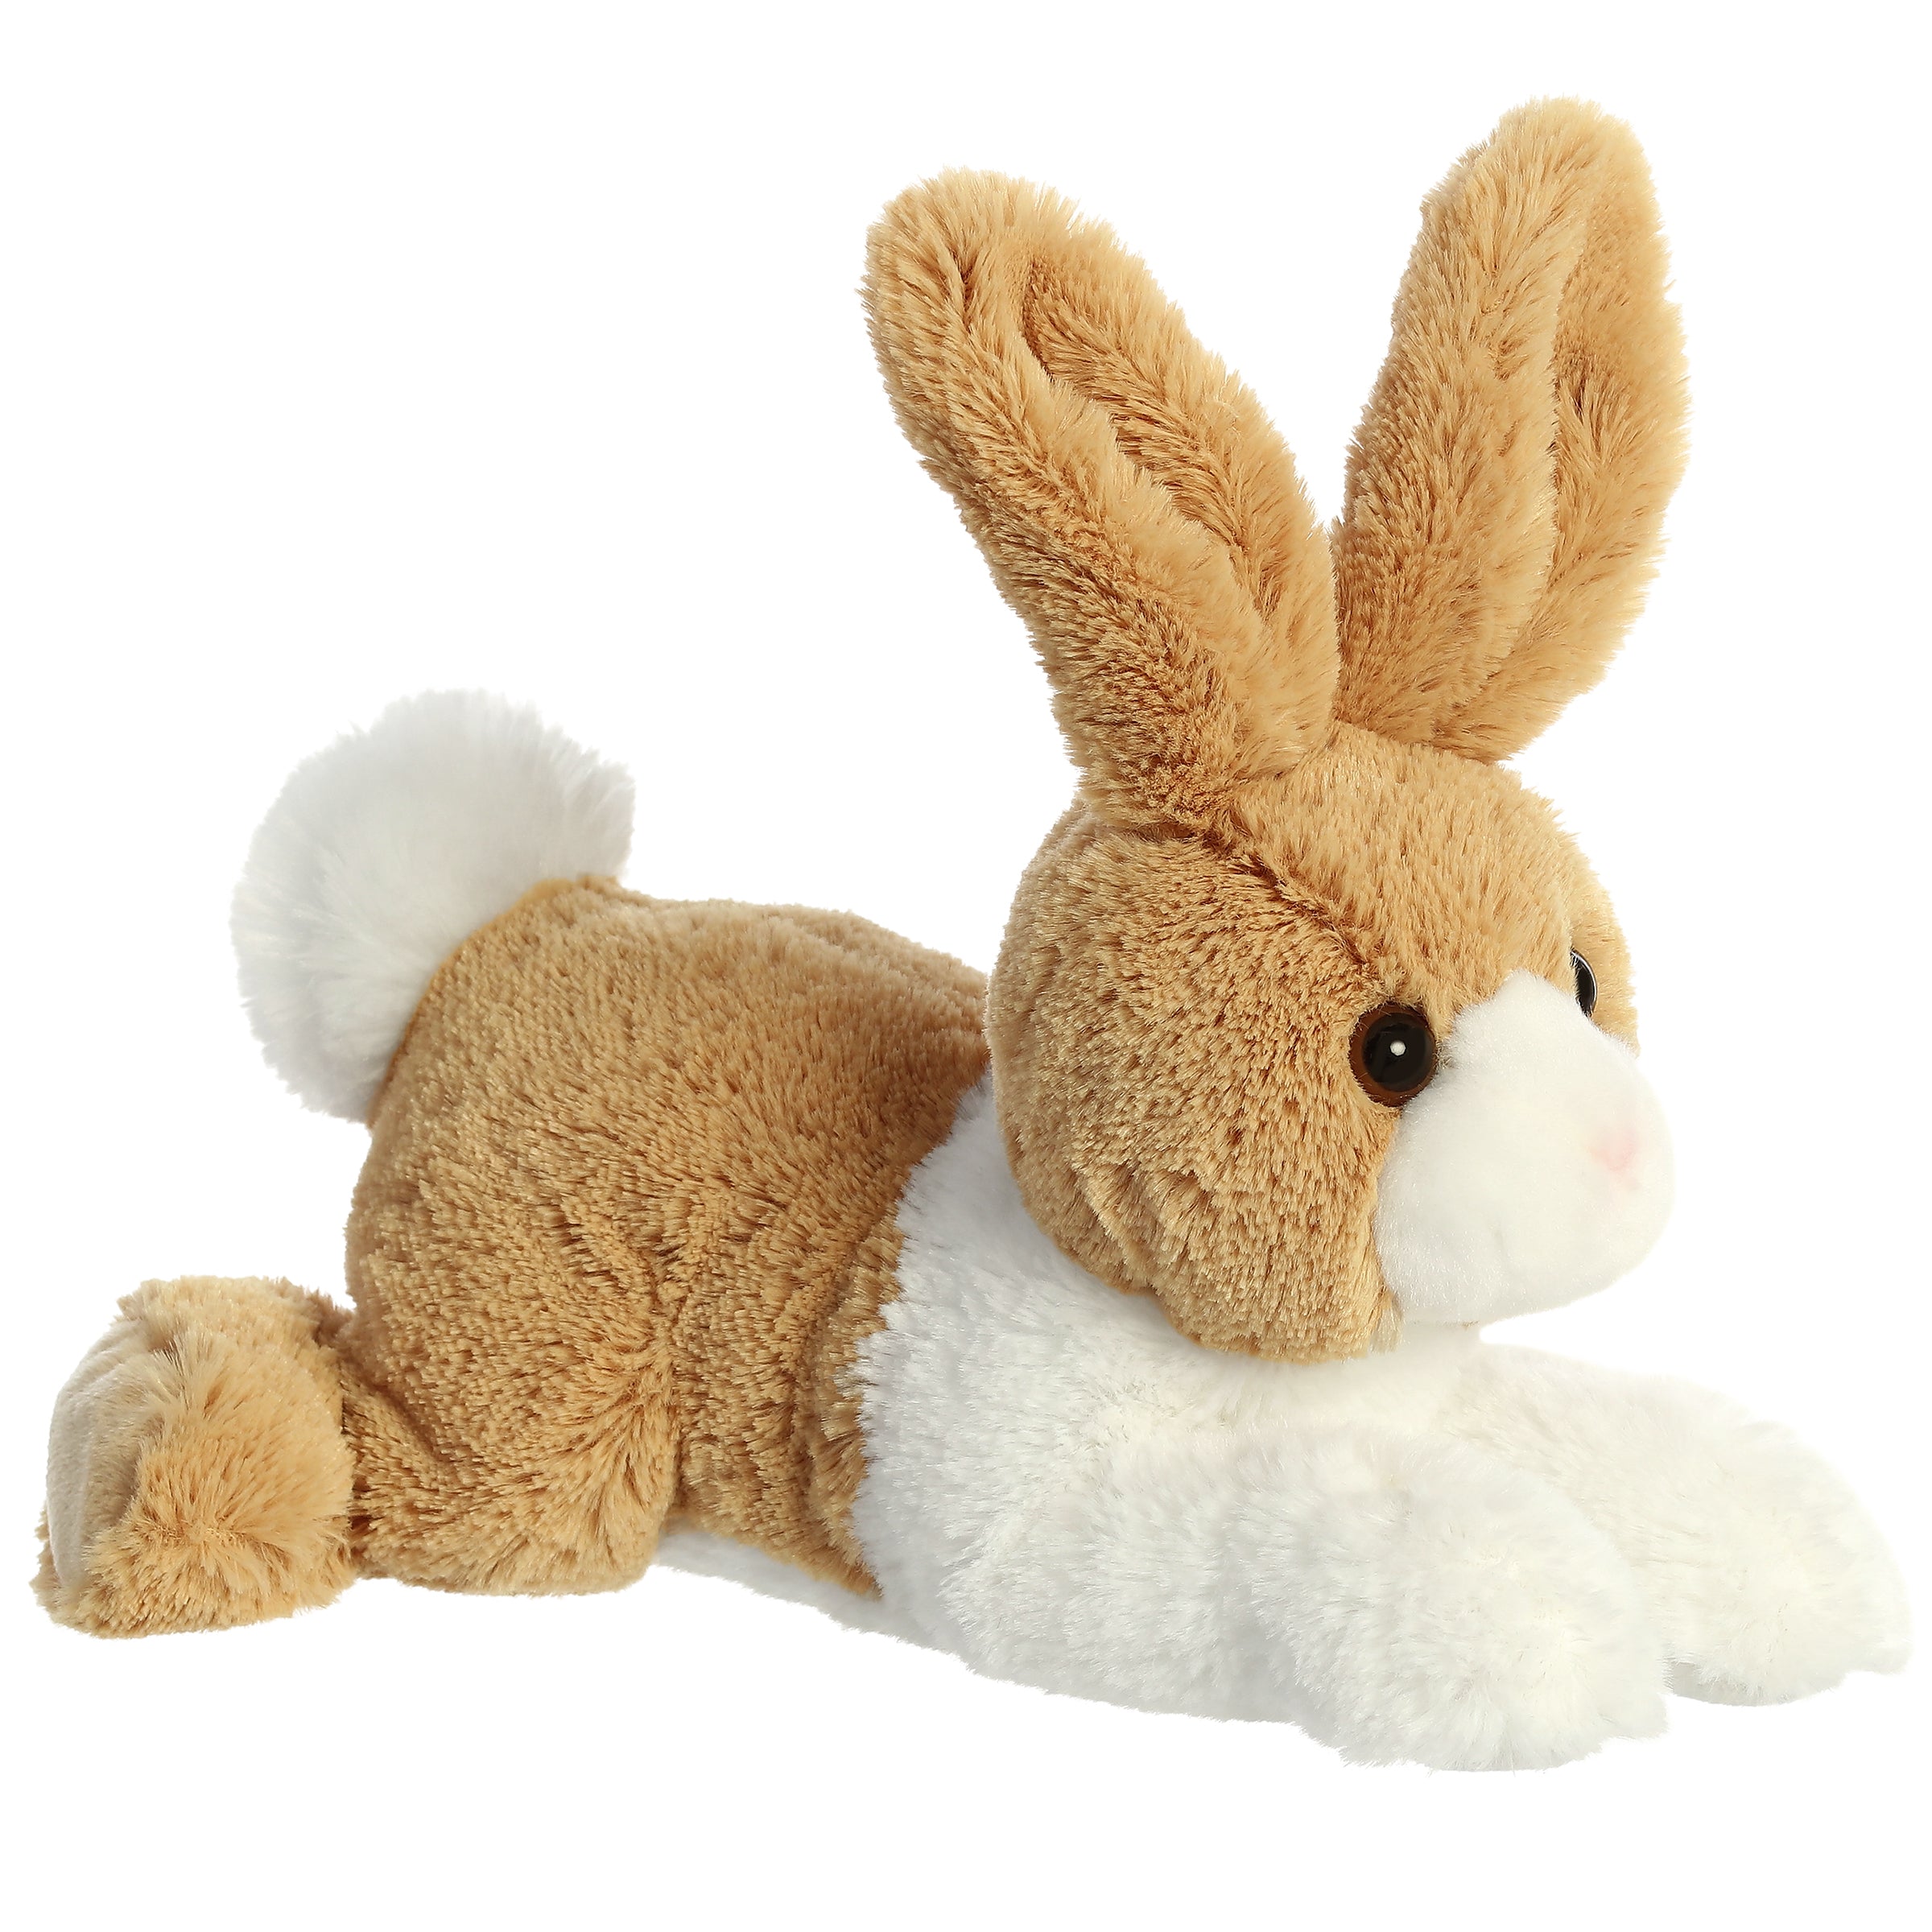 Flopsie Dutch Rabbit Plush, tan fur, bright eyes, mimics Dutch Rabbit breed, ideal for hugs and collections.